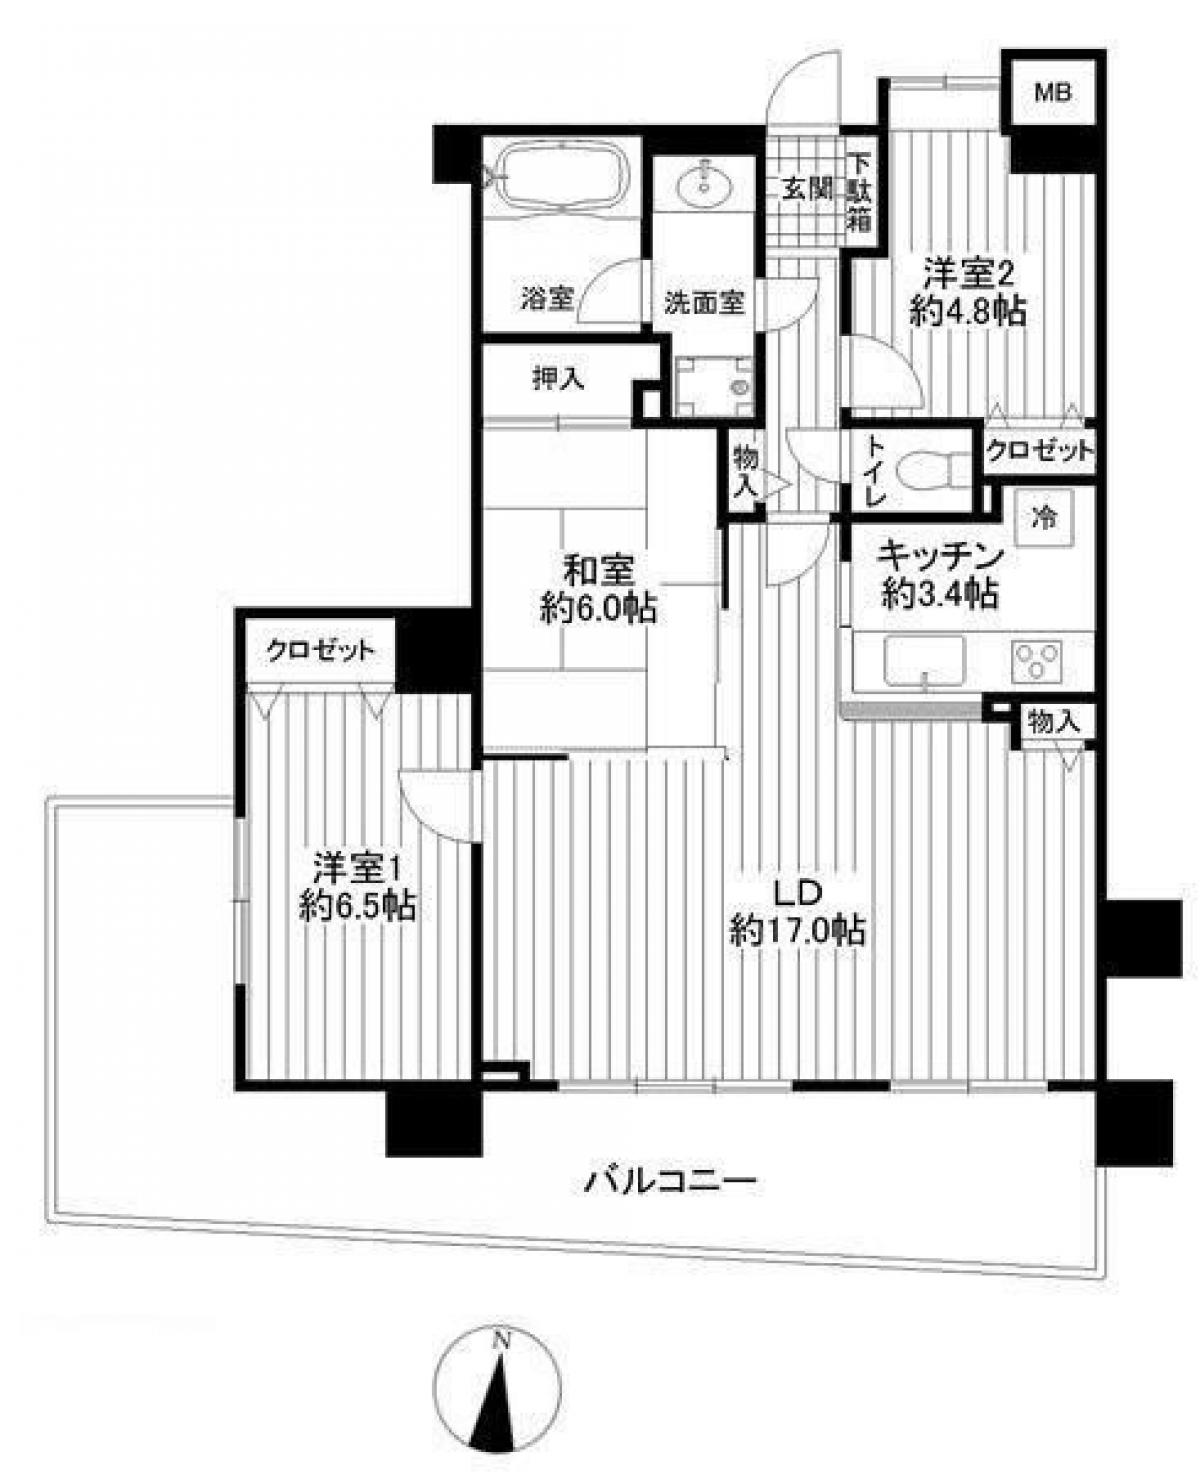 Picture of Apartment For Sale in Iruma Shi, Saitama, Japan